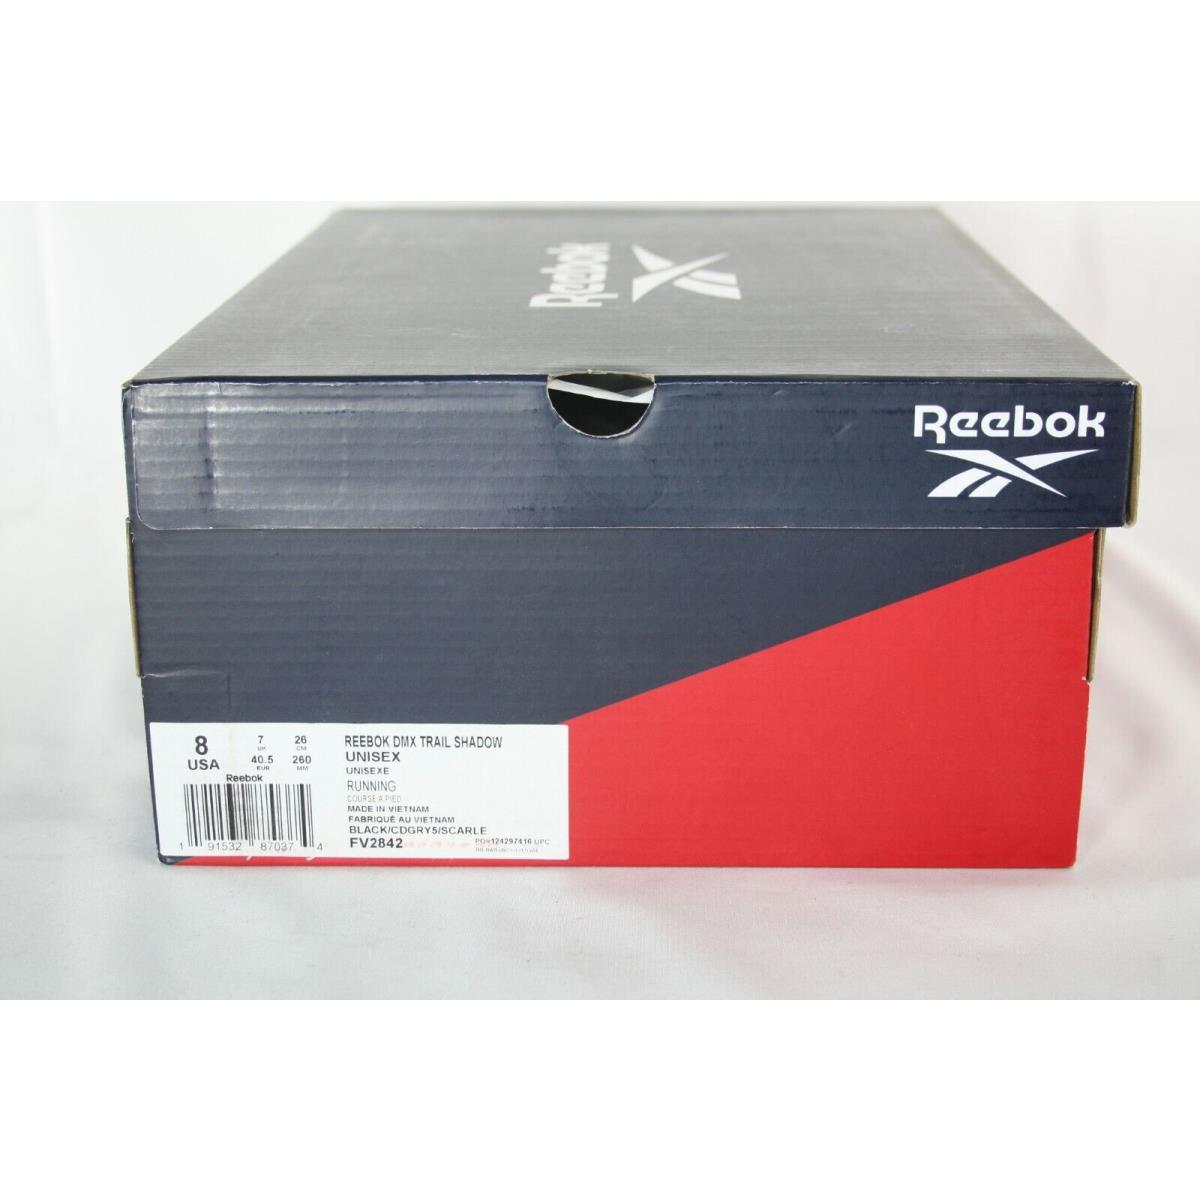 Reebok shoes DMX TRAIL SHADOW - Multicolor 7